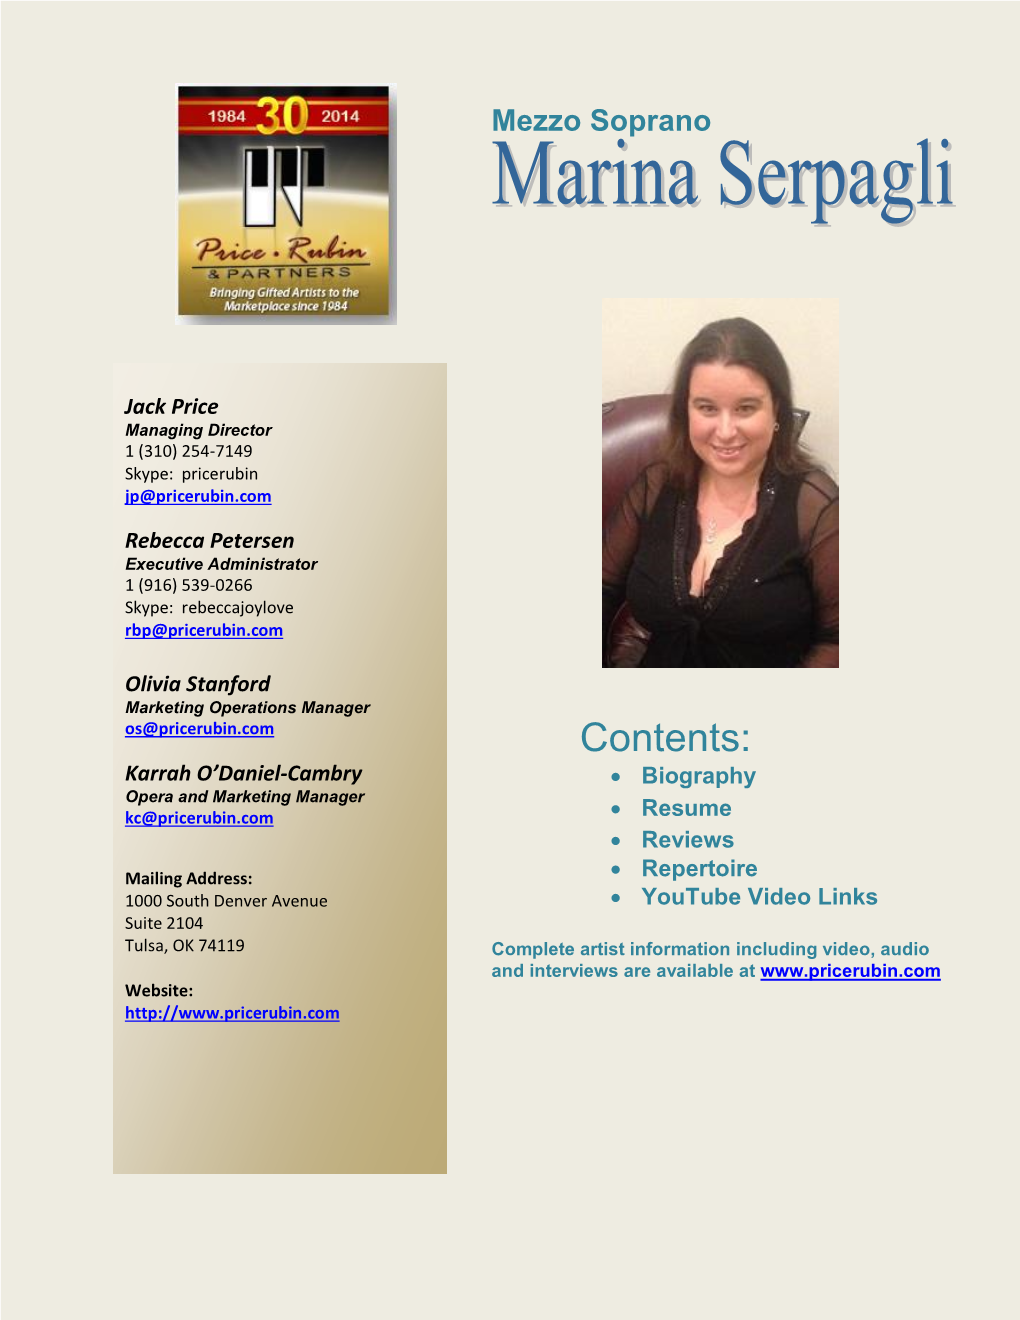 Marina Serpagli – Biography